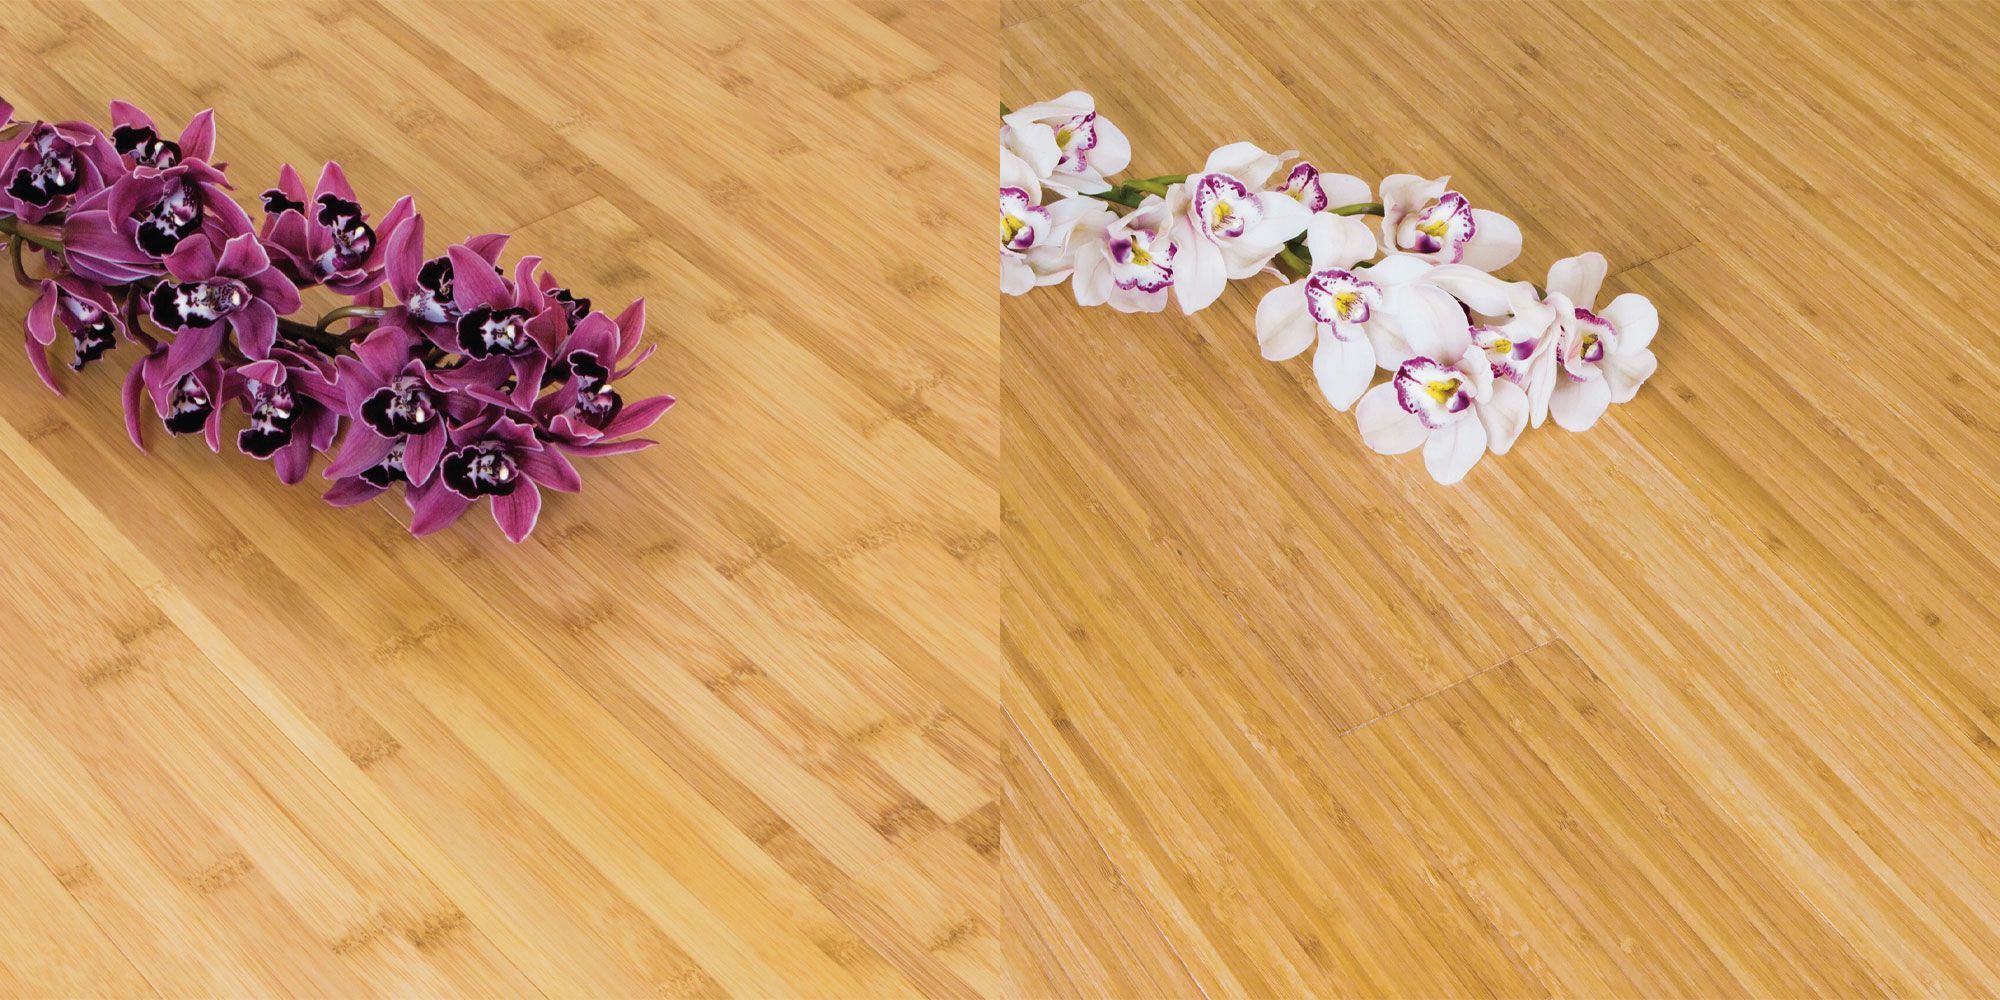 Vertical or horizontal bamboo flooring?